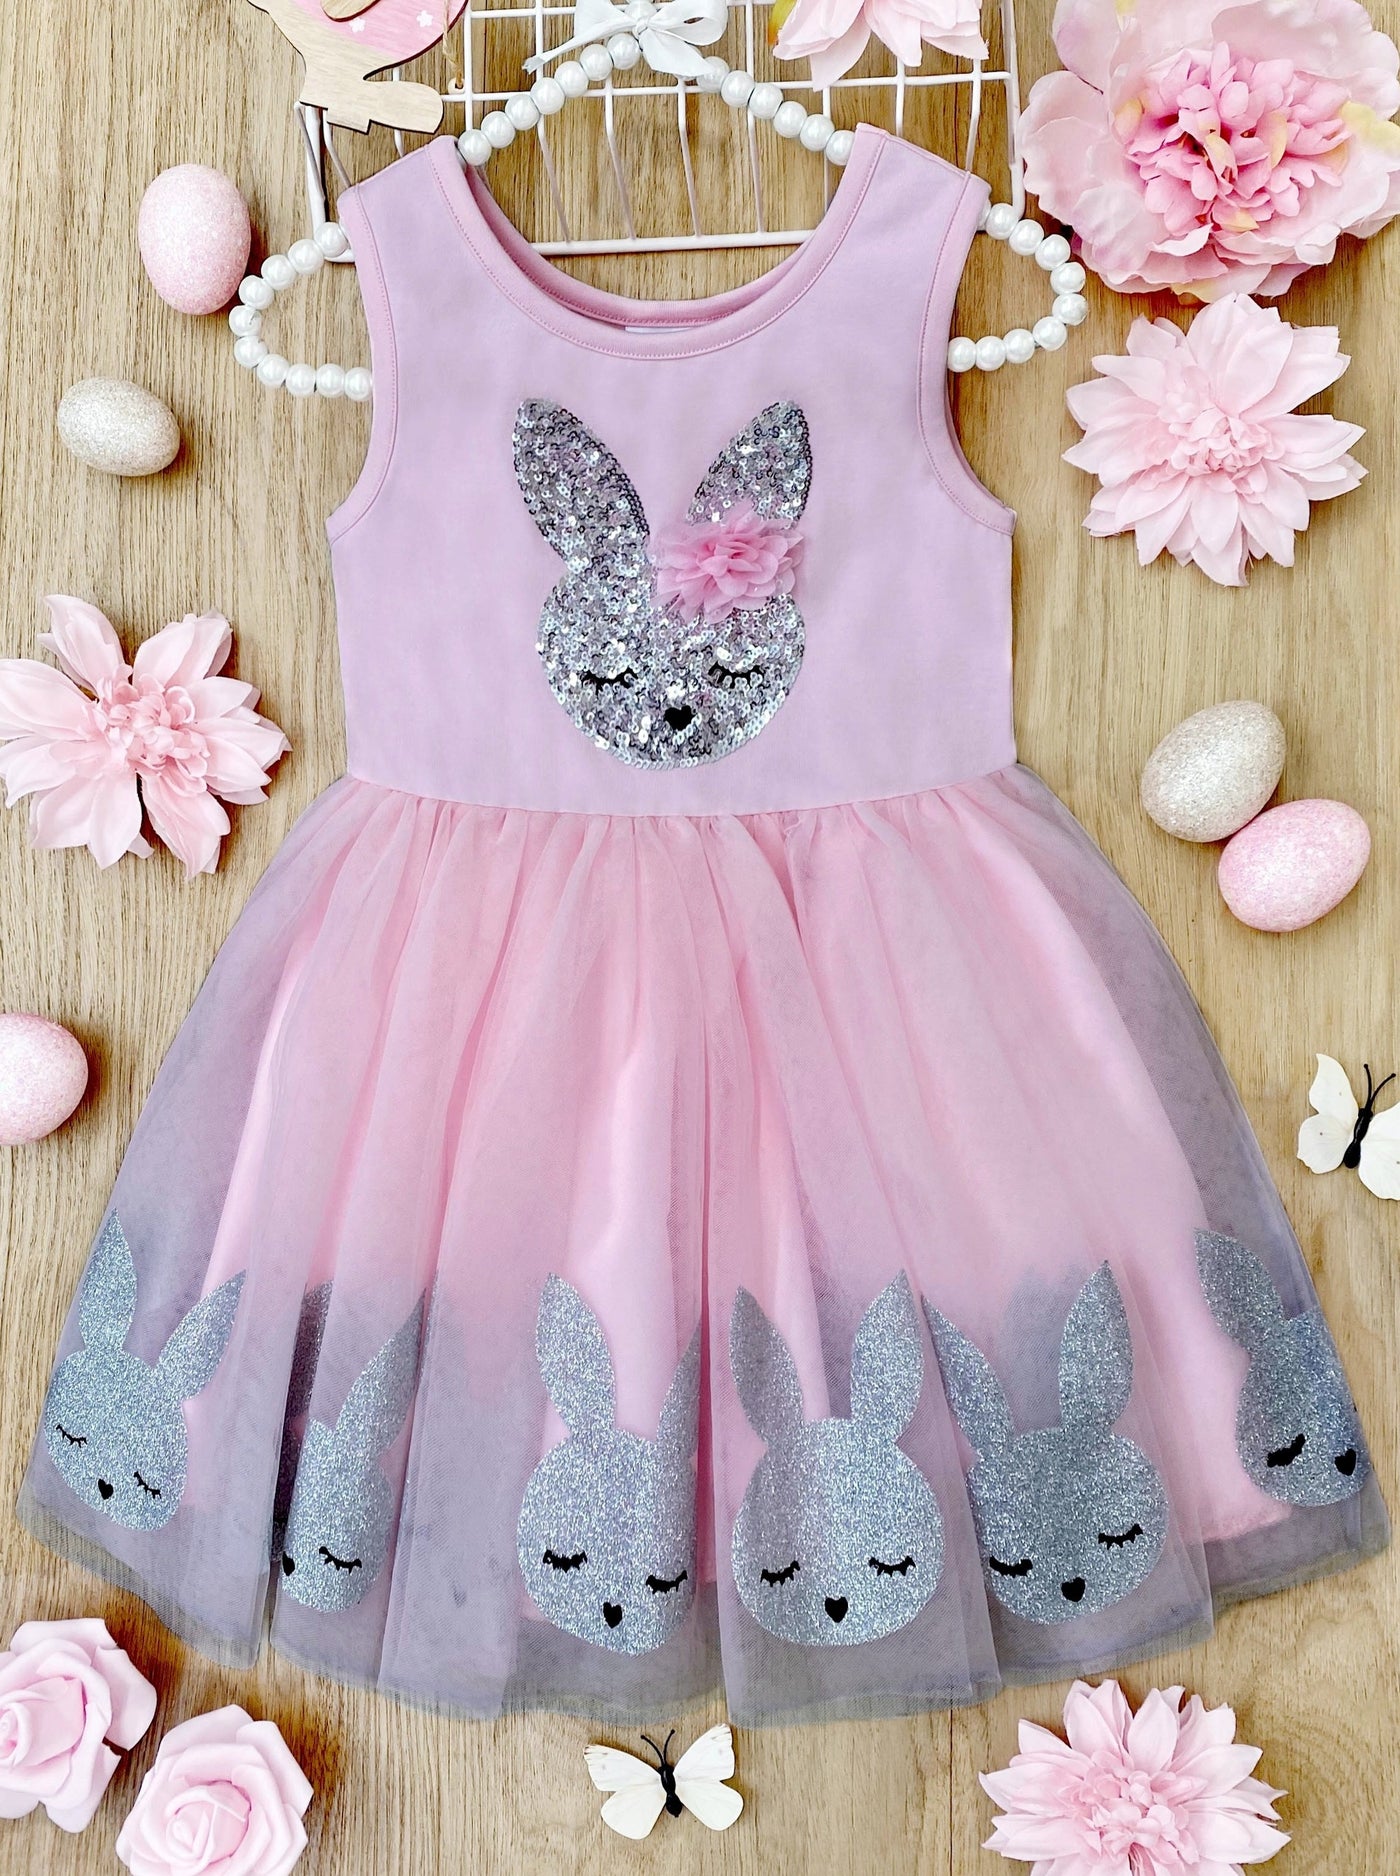 Mia Belle Girls Easter Dresses | Sequin Bunny Pink Tutu Dress